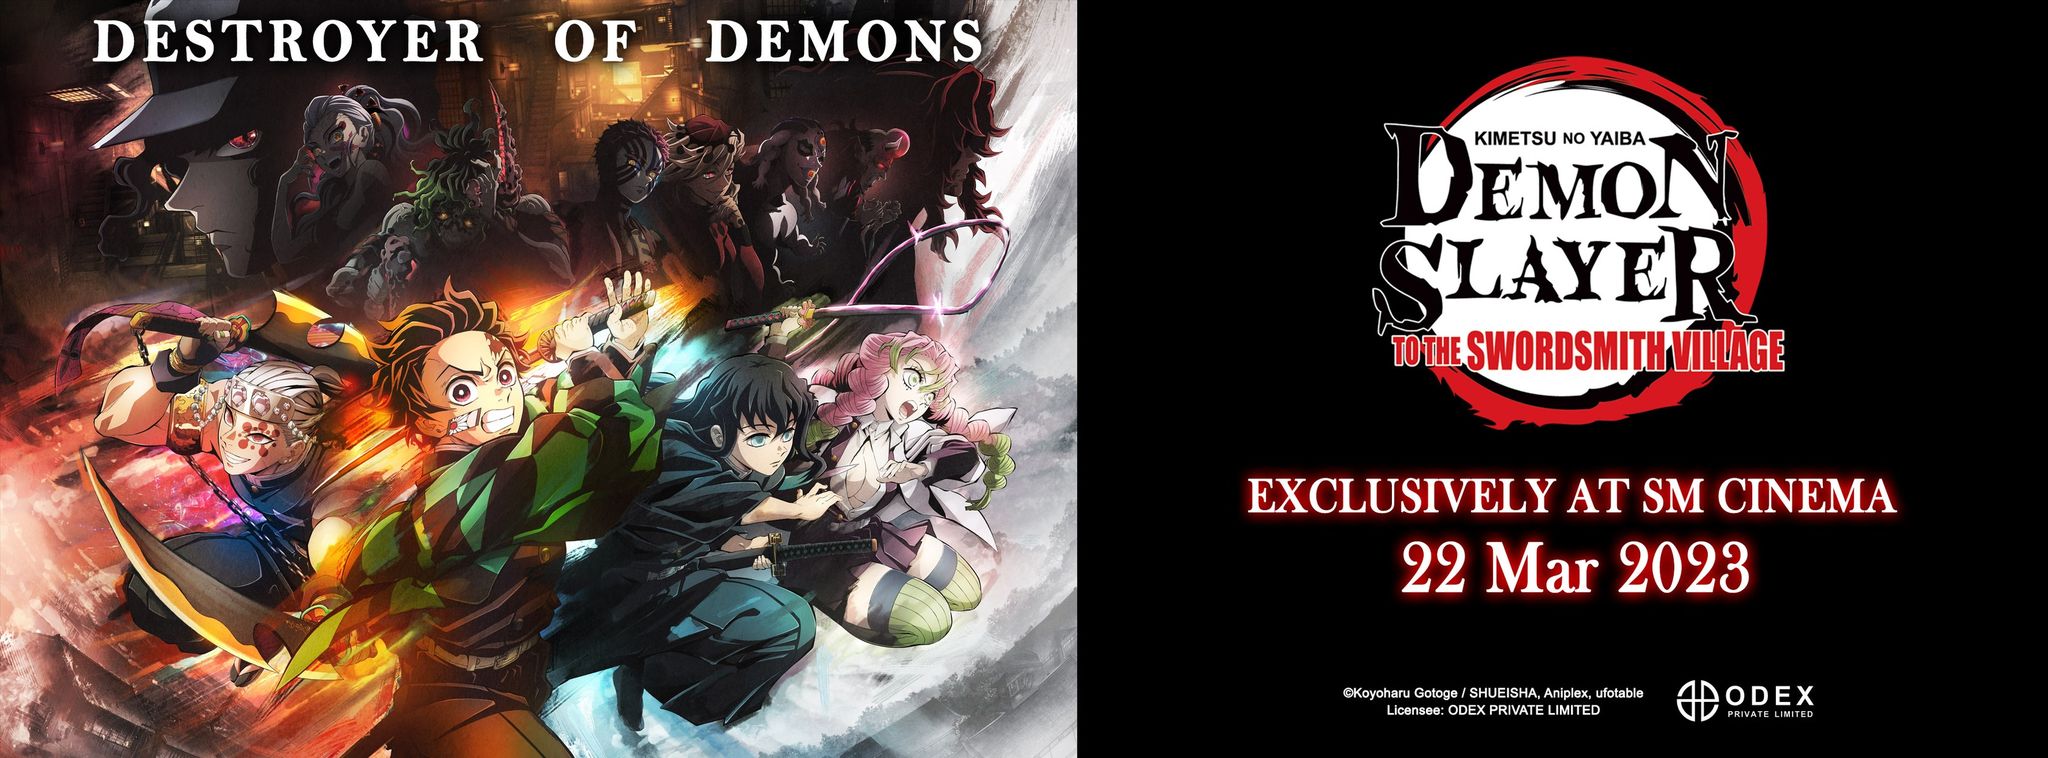 More Uniqlo Demon Slayer Anime TShirts Are Coming  Anime Collective